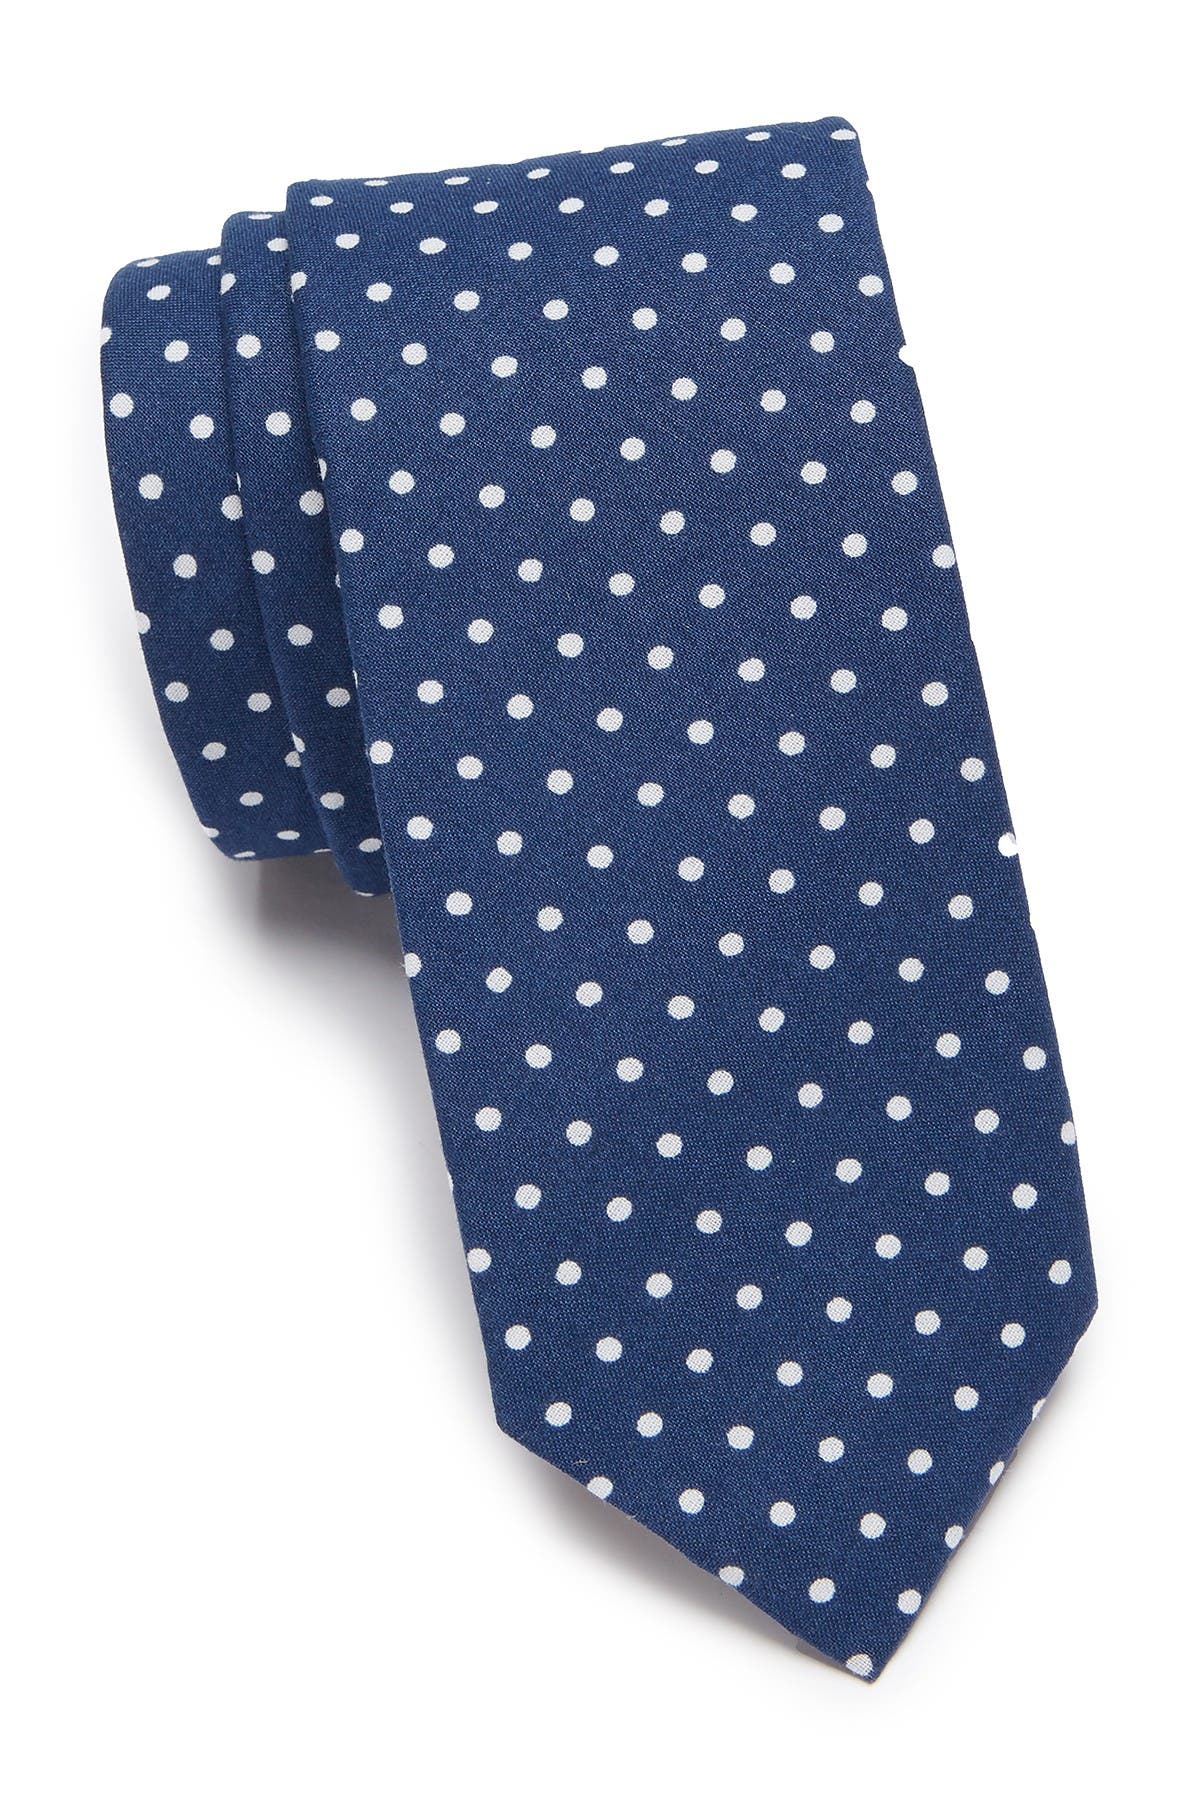 Original Penguin Wenson Dot Print Tie In Med Blue